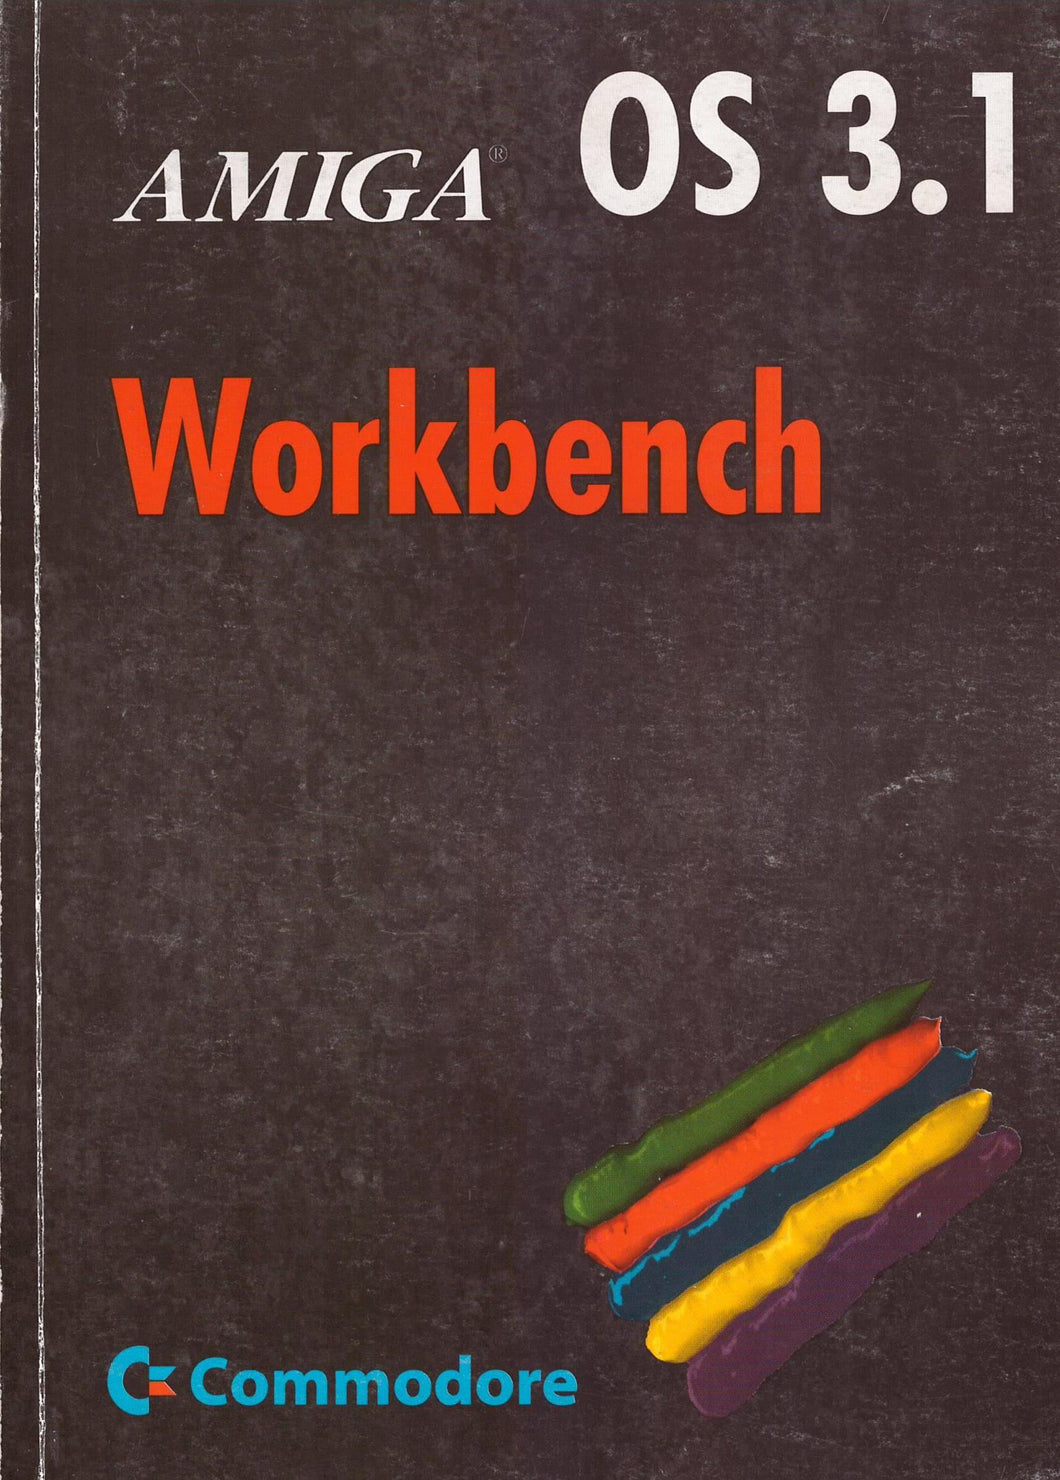 Commodore Handbuchsatz AMIGA OS 3.1 Workbench